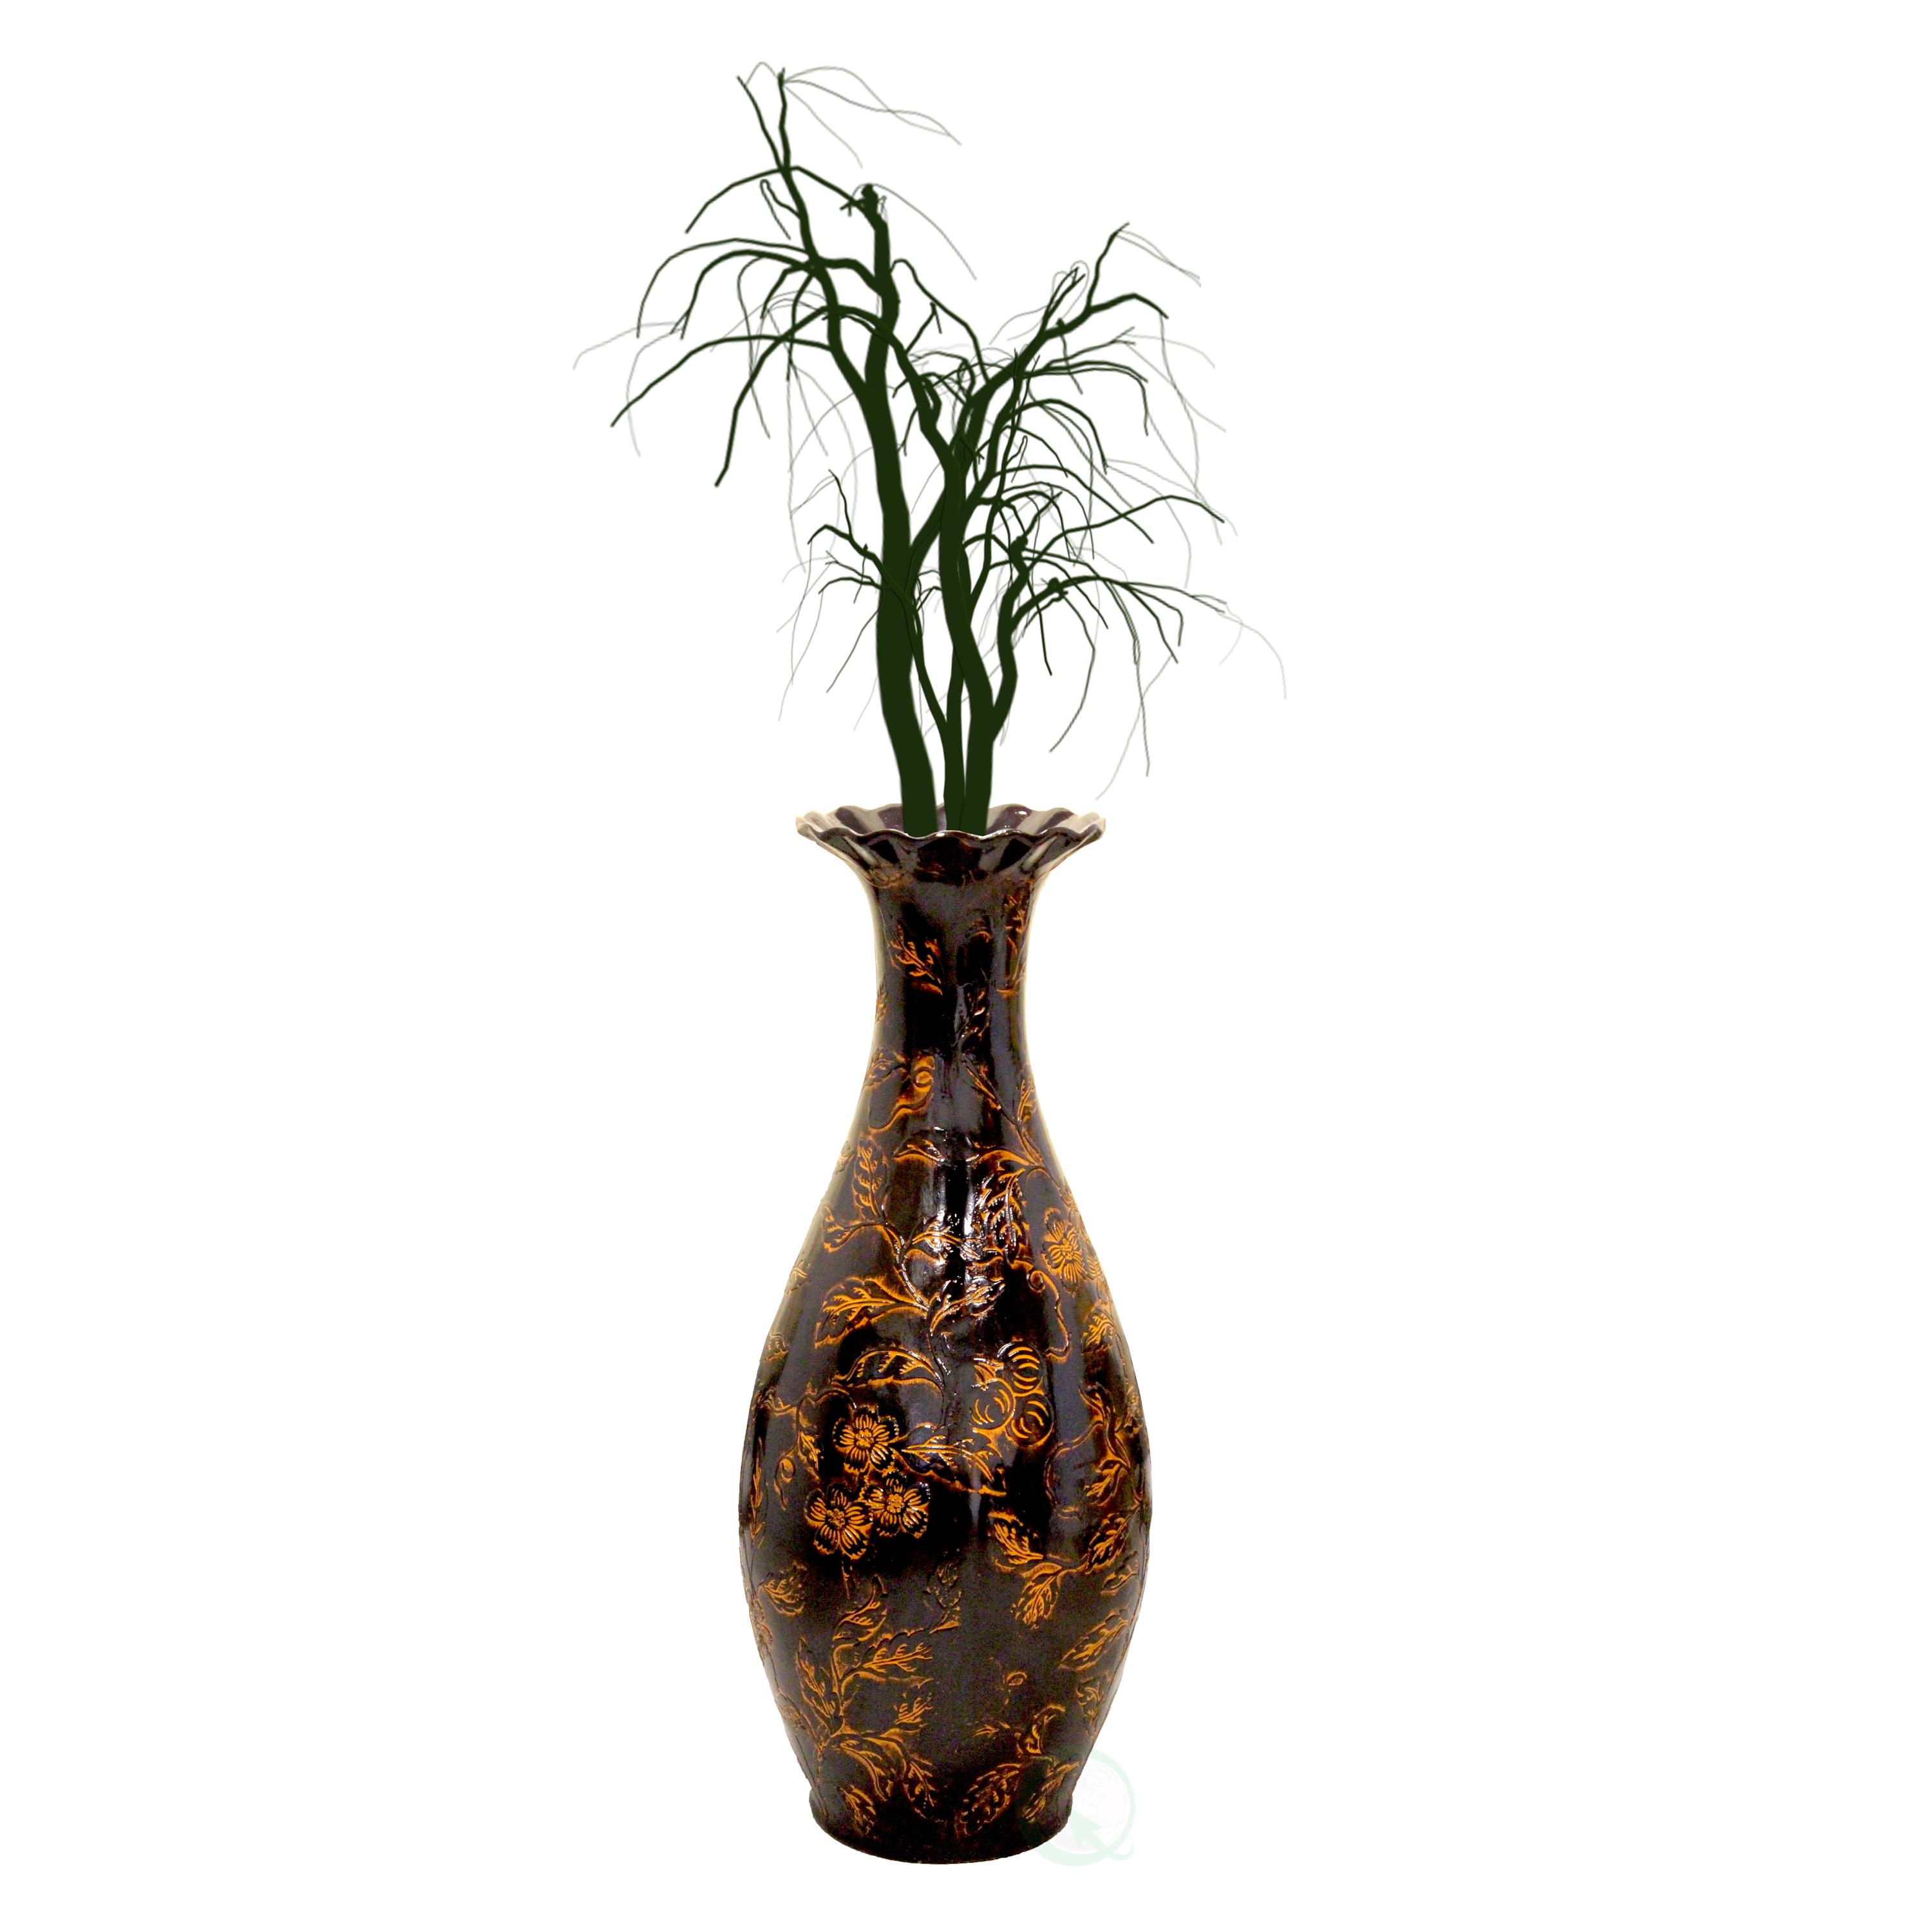 Tall Floor Vase, Traditional Brown Home Interior Vase, Ceramic Flower Holder Centerpiece For Room Decor, Livingroom Decor Large Floor Vase